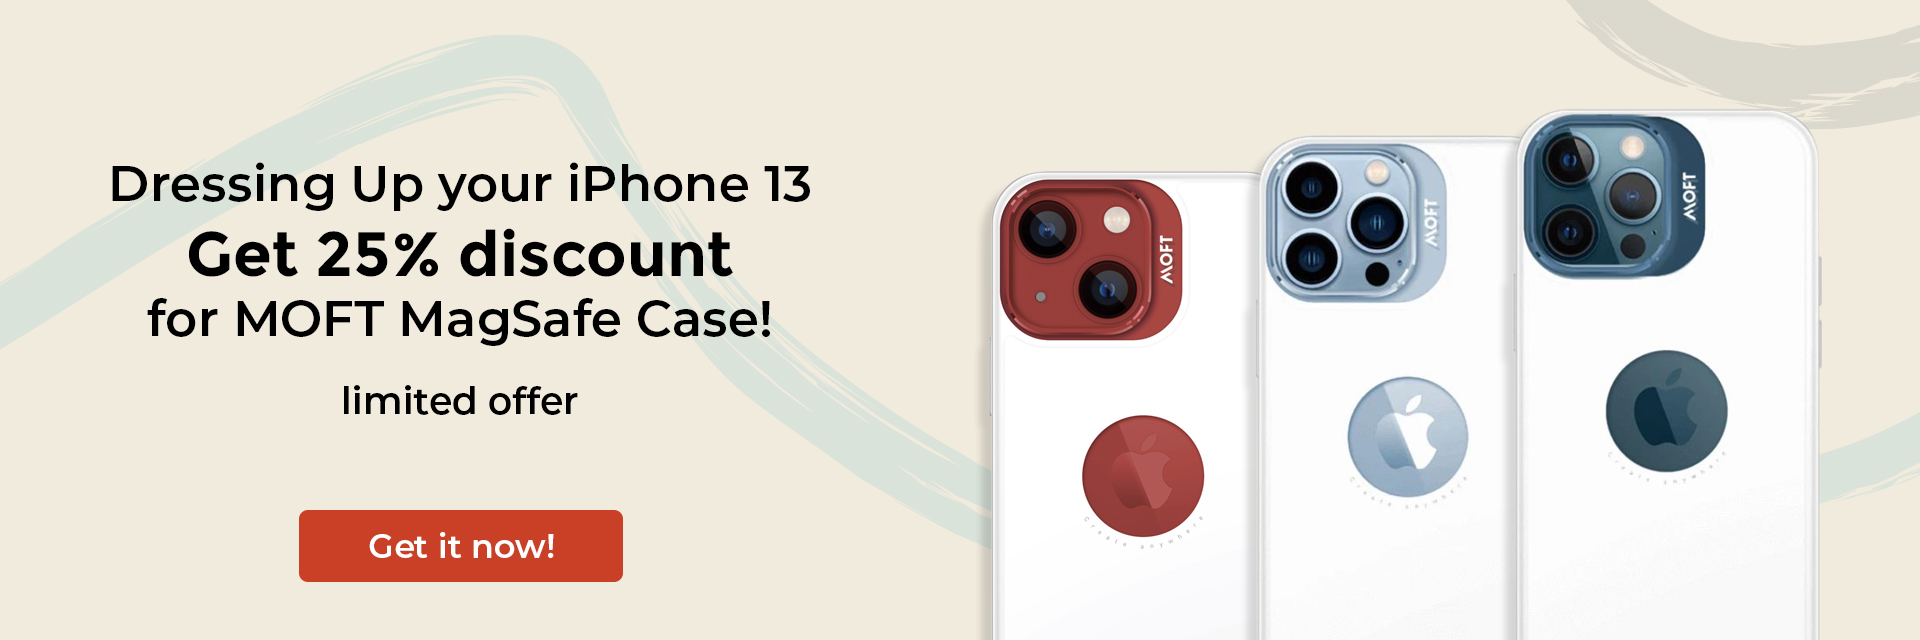 banner moft iphone 13 case